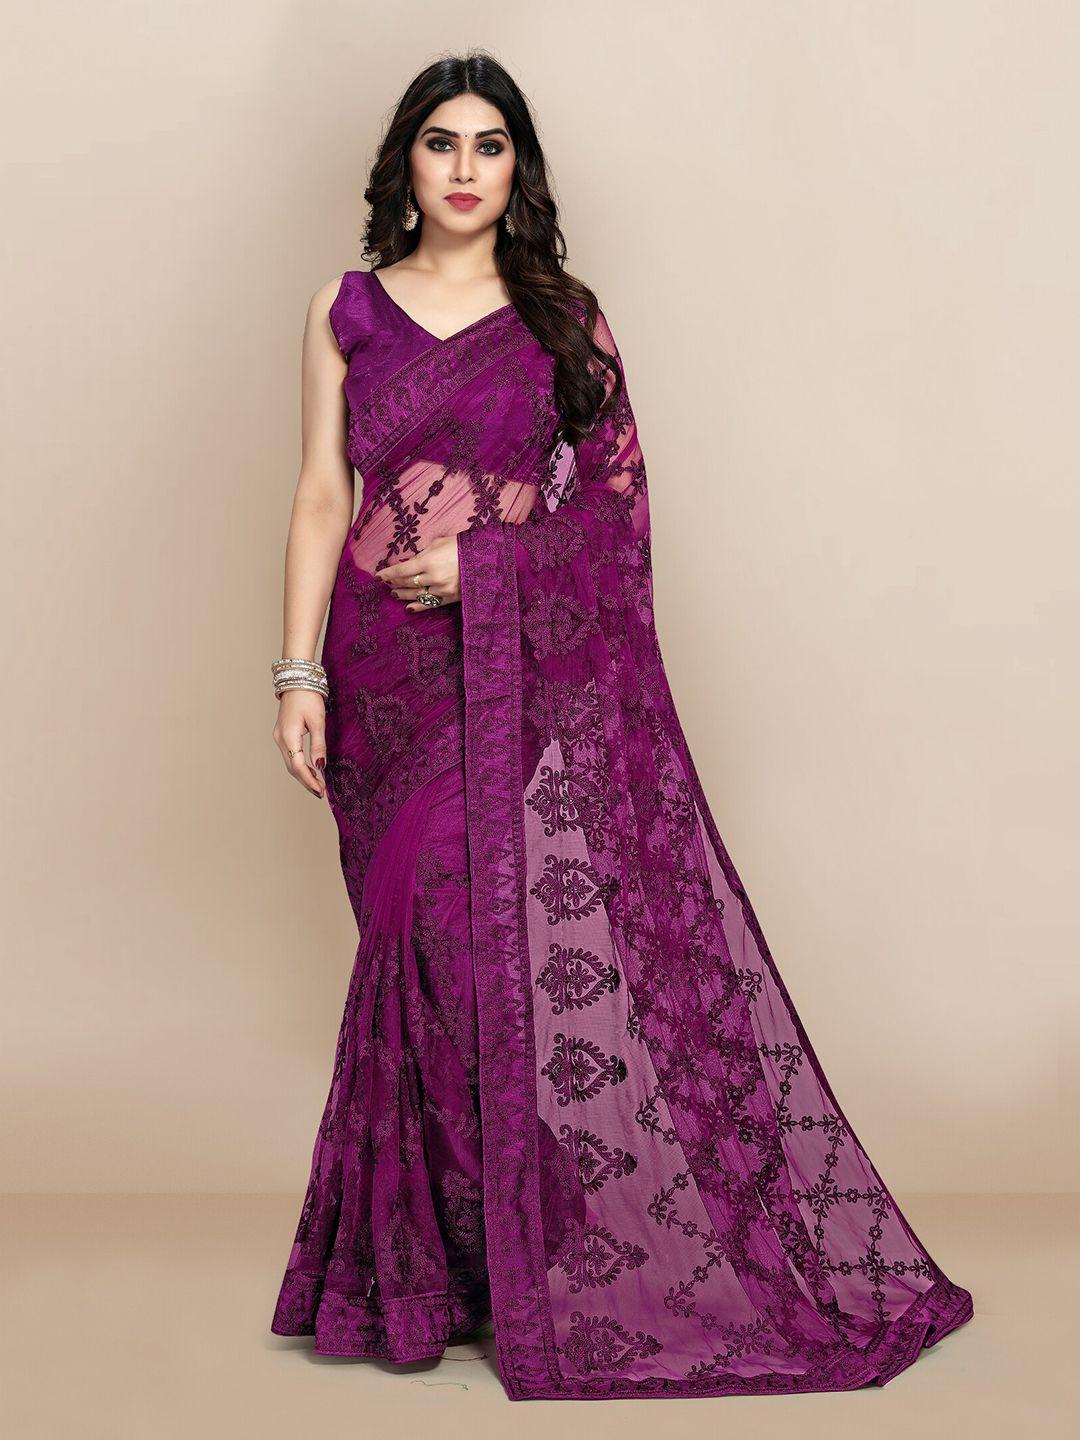 vairagee purple floral embroidered net saree